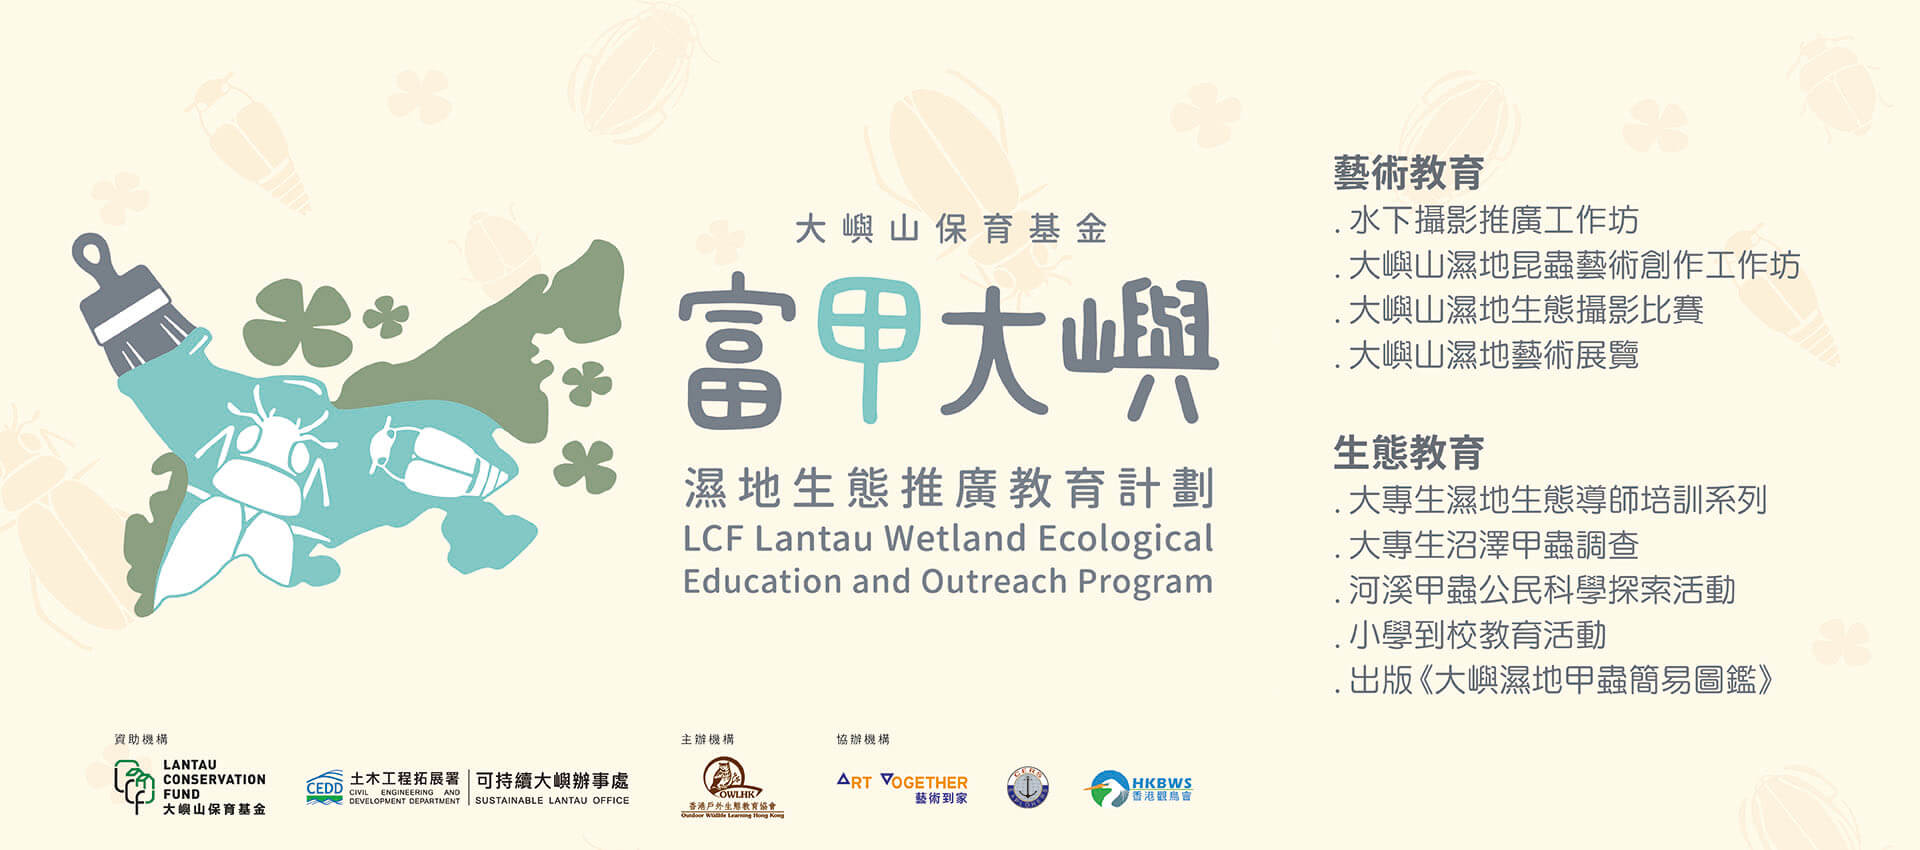 LCF Lantau Wetland Ecological Education and Outreach Program